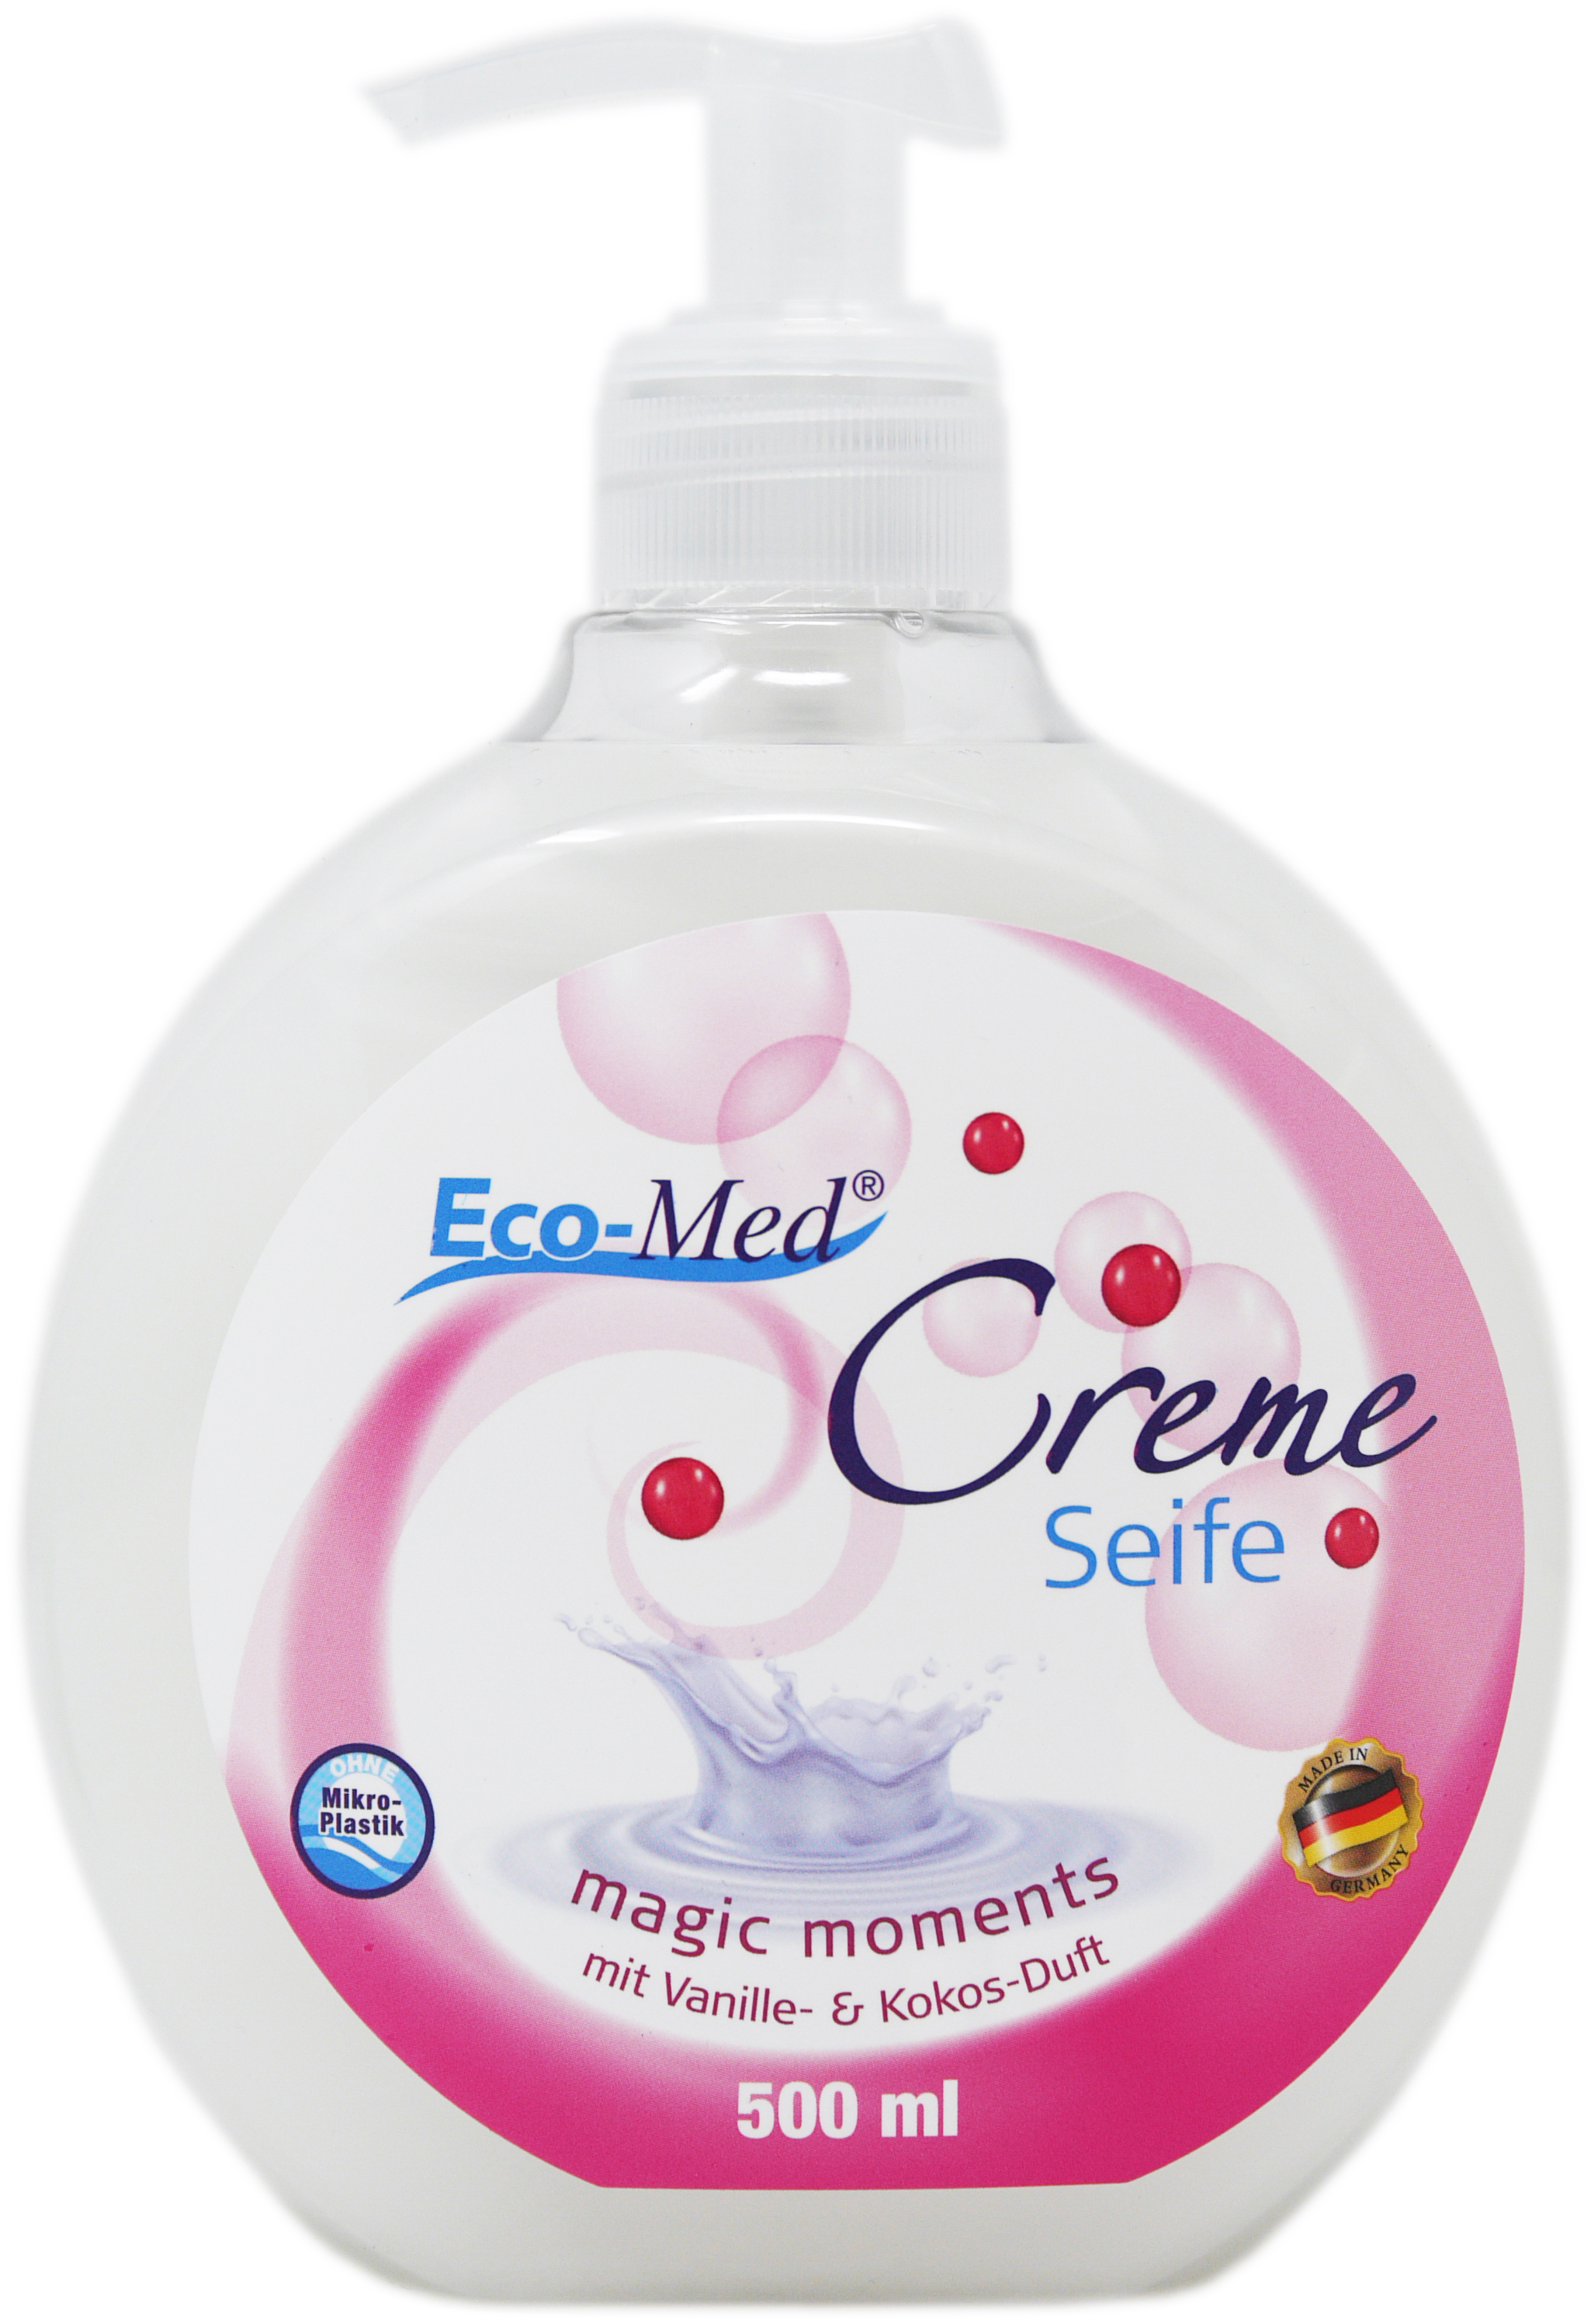 01623 - Eco-Med Cremeseife 500 ml - magic moments - mit Vanille & Kokos Duft